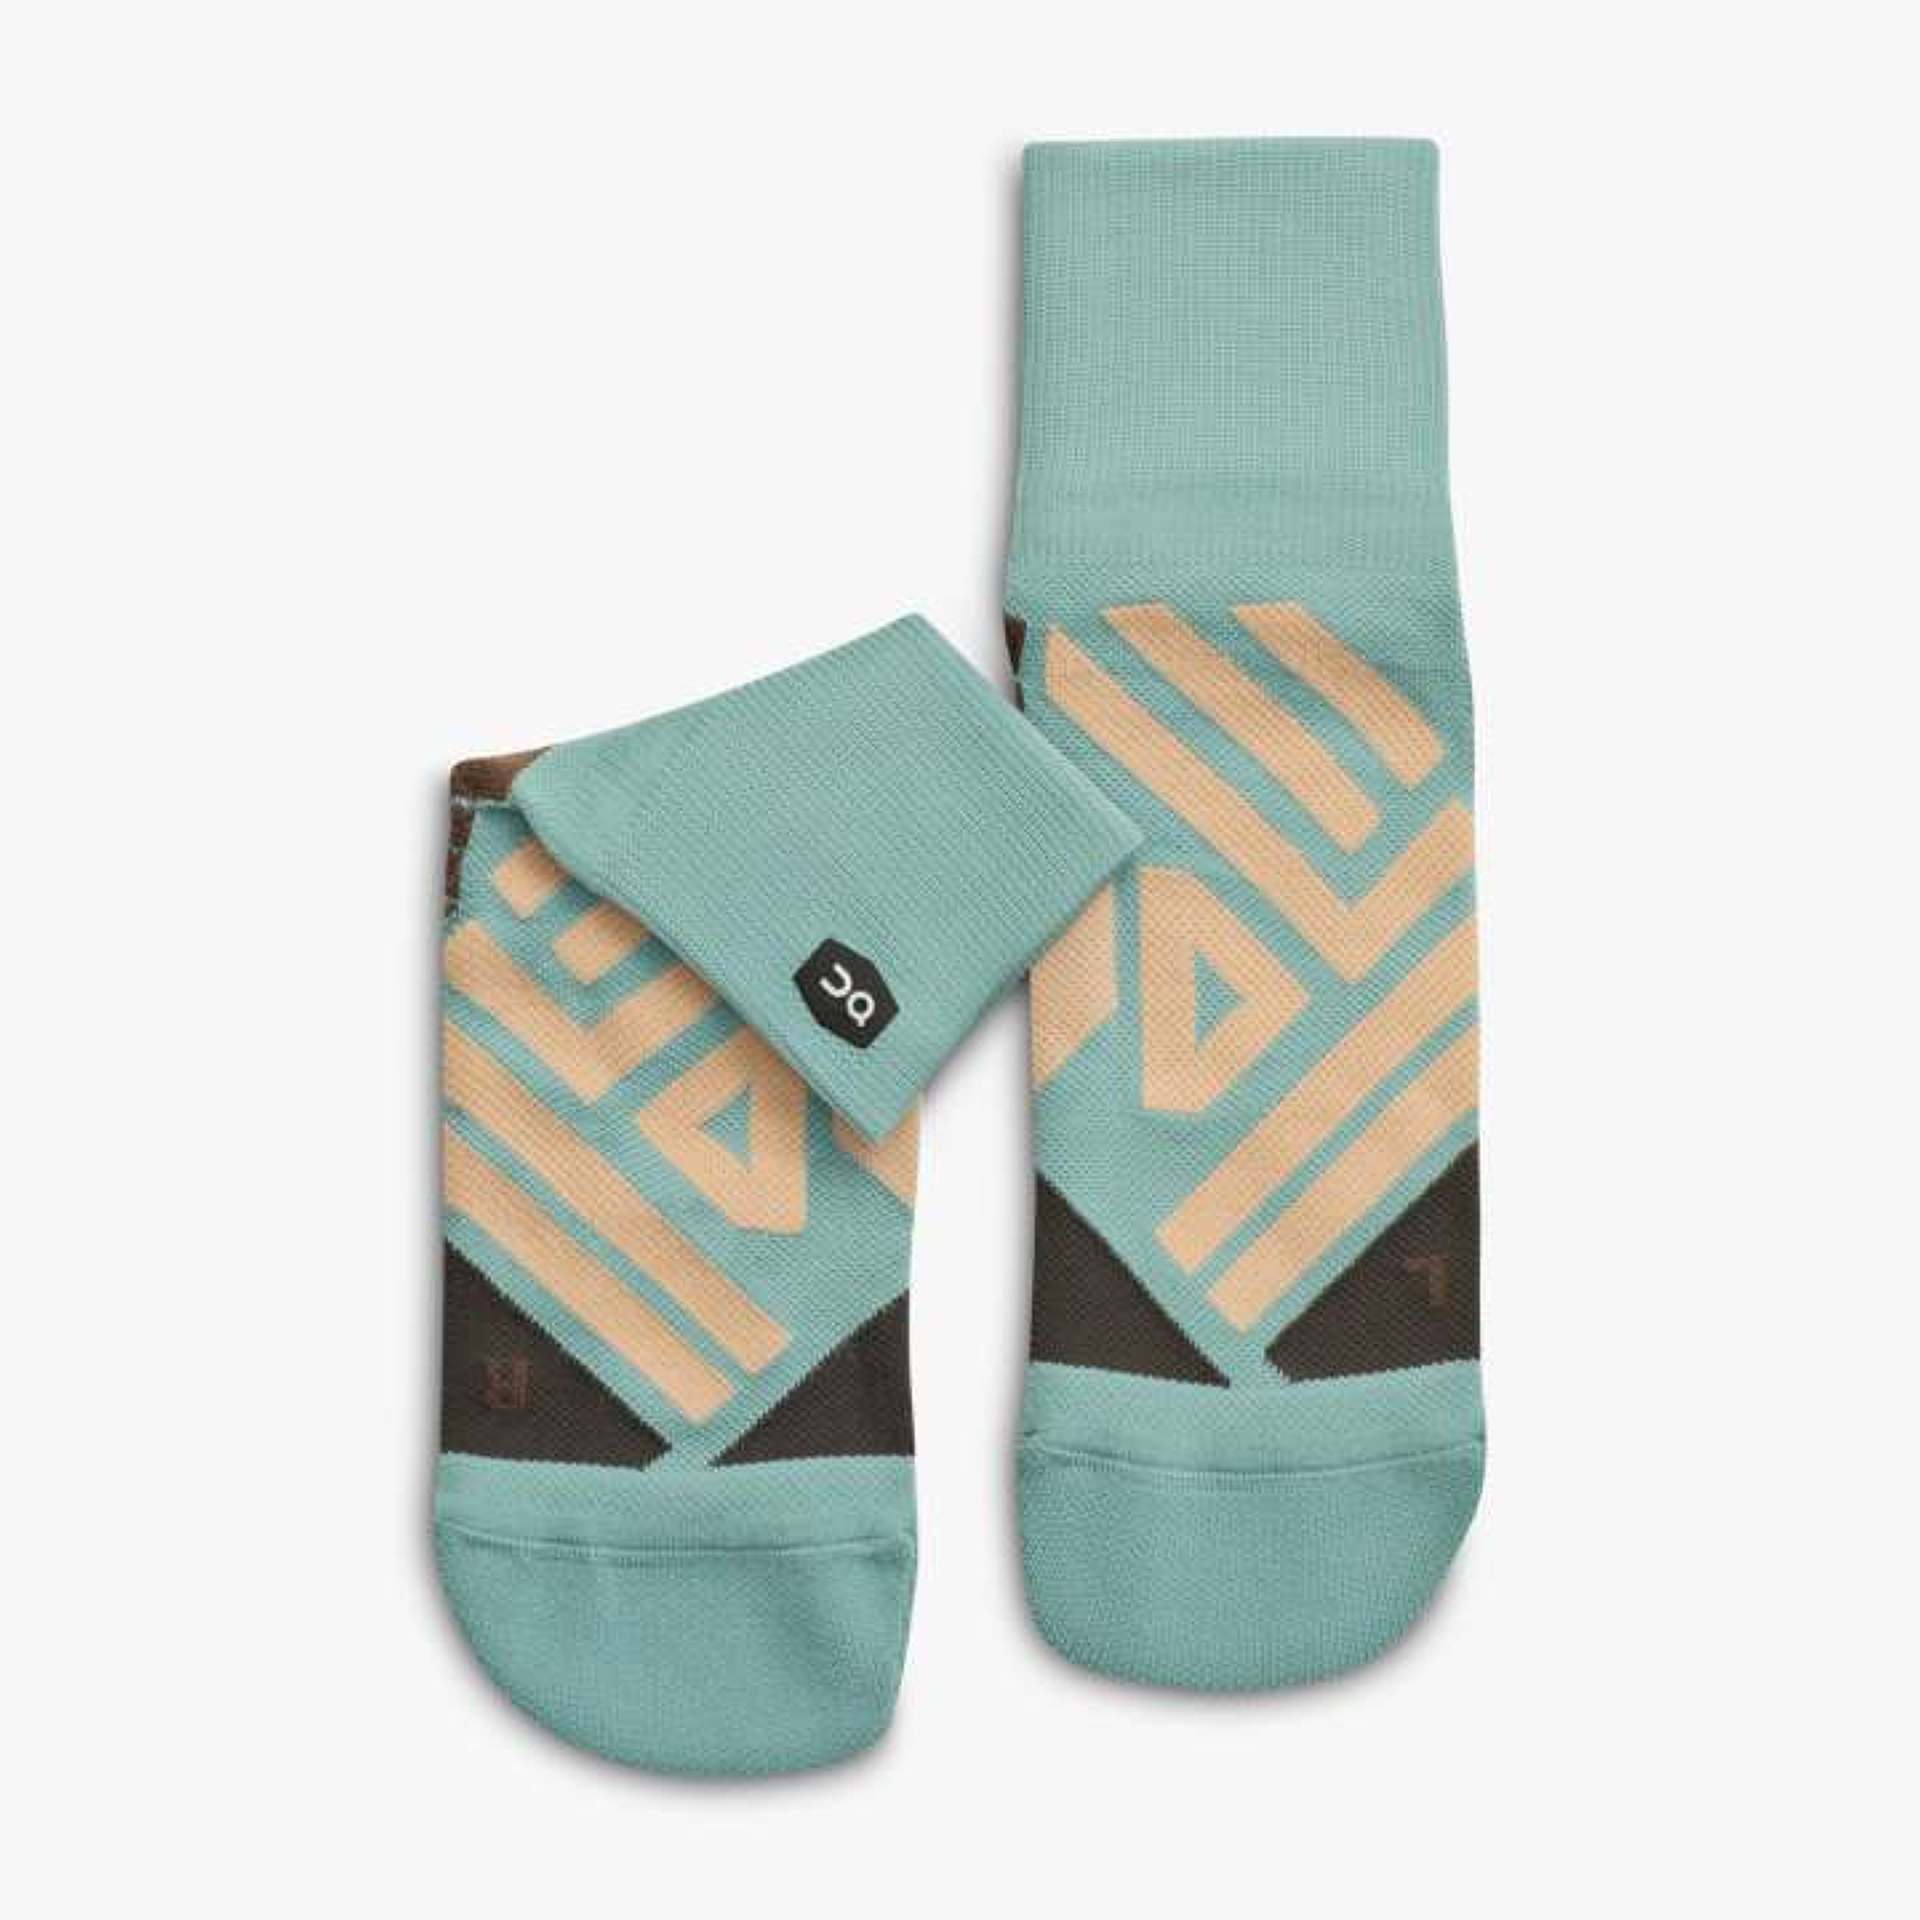 Běžecké ponožky ON Sea/Rosebrown, mid sock